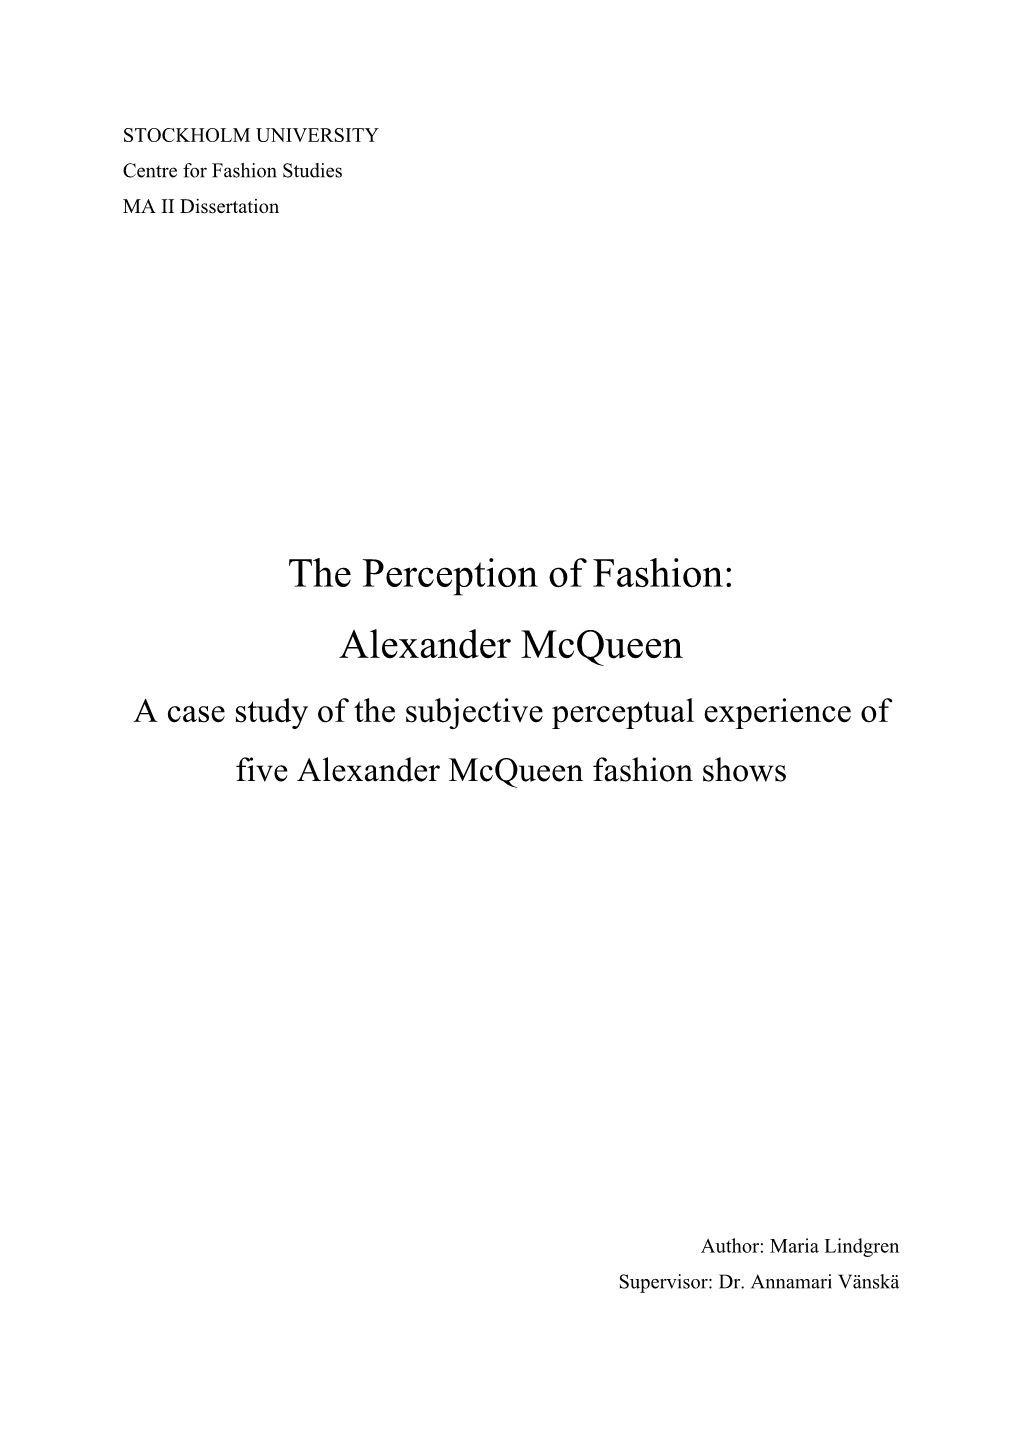 Alexander Mcqueen a Case Study of the Subjective Perceptual Experience of Five Alexander Mcqueen Fashion Shows